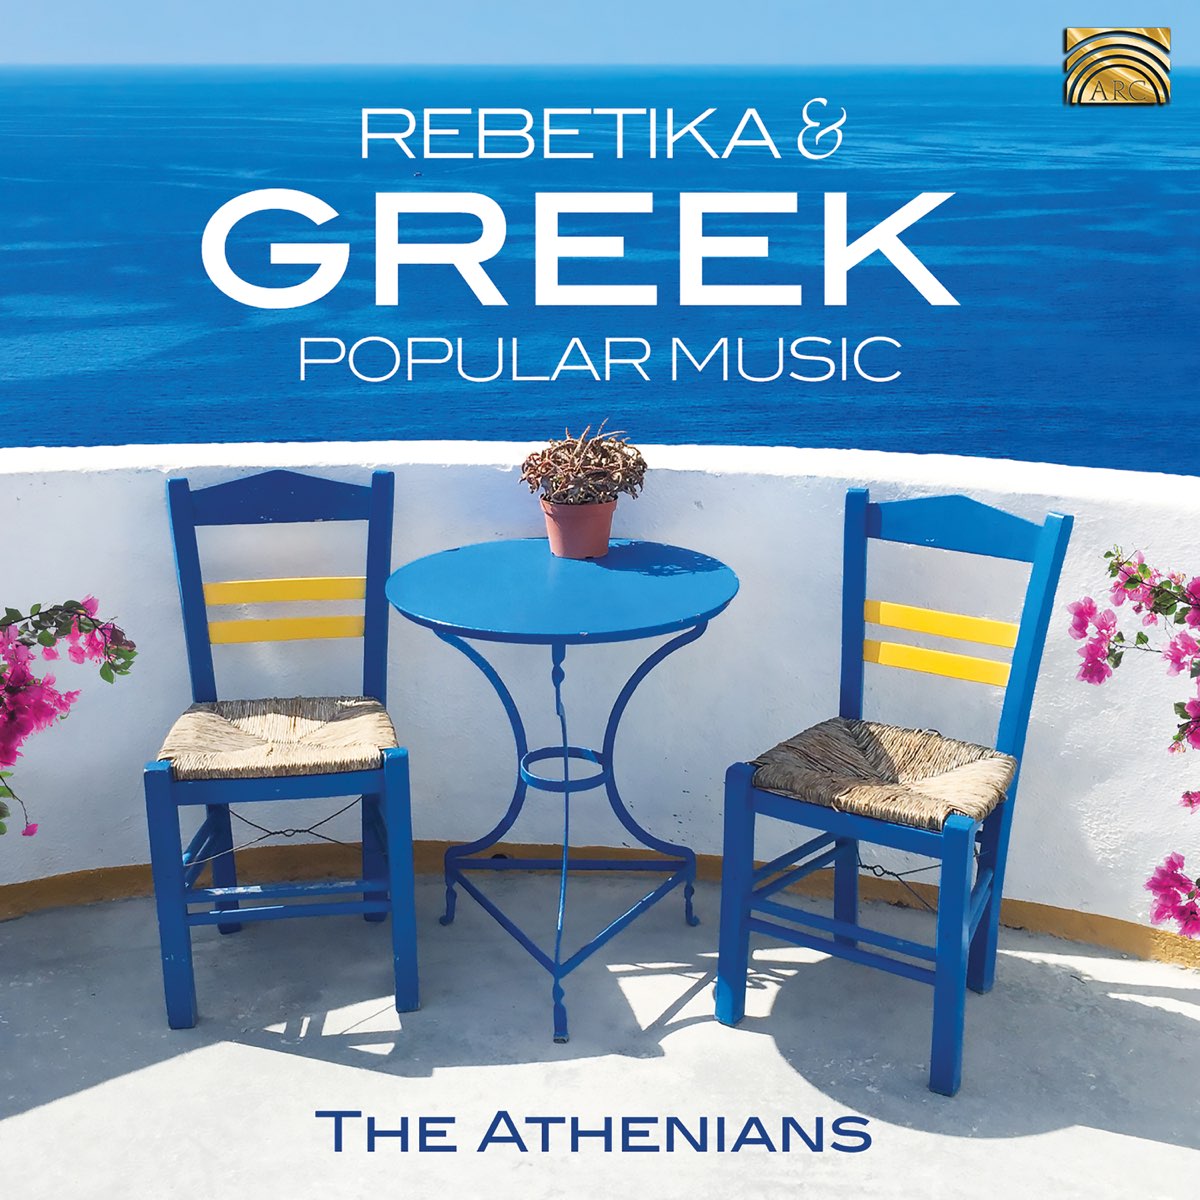 ‎Rebetika & Greek Popular Music by The Athenians on Apple Music